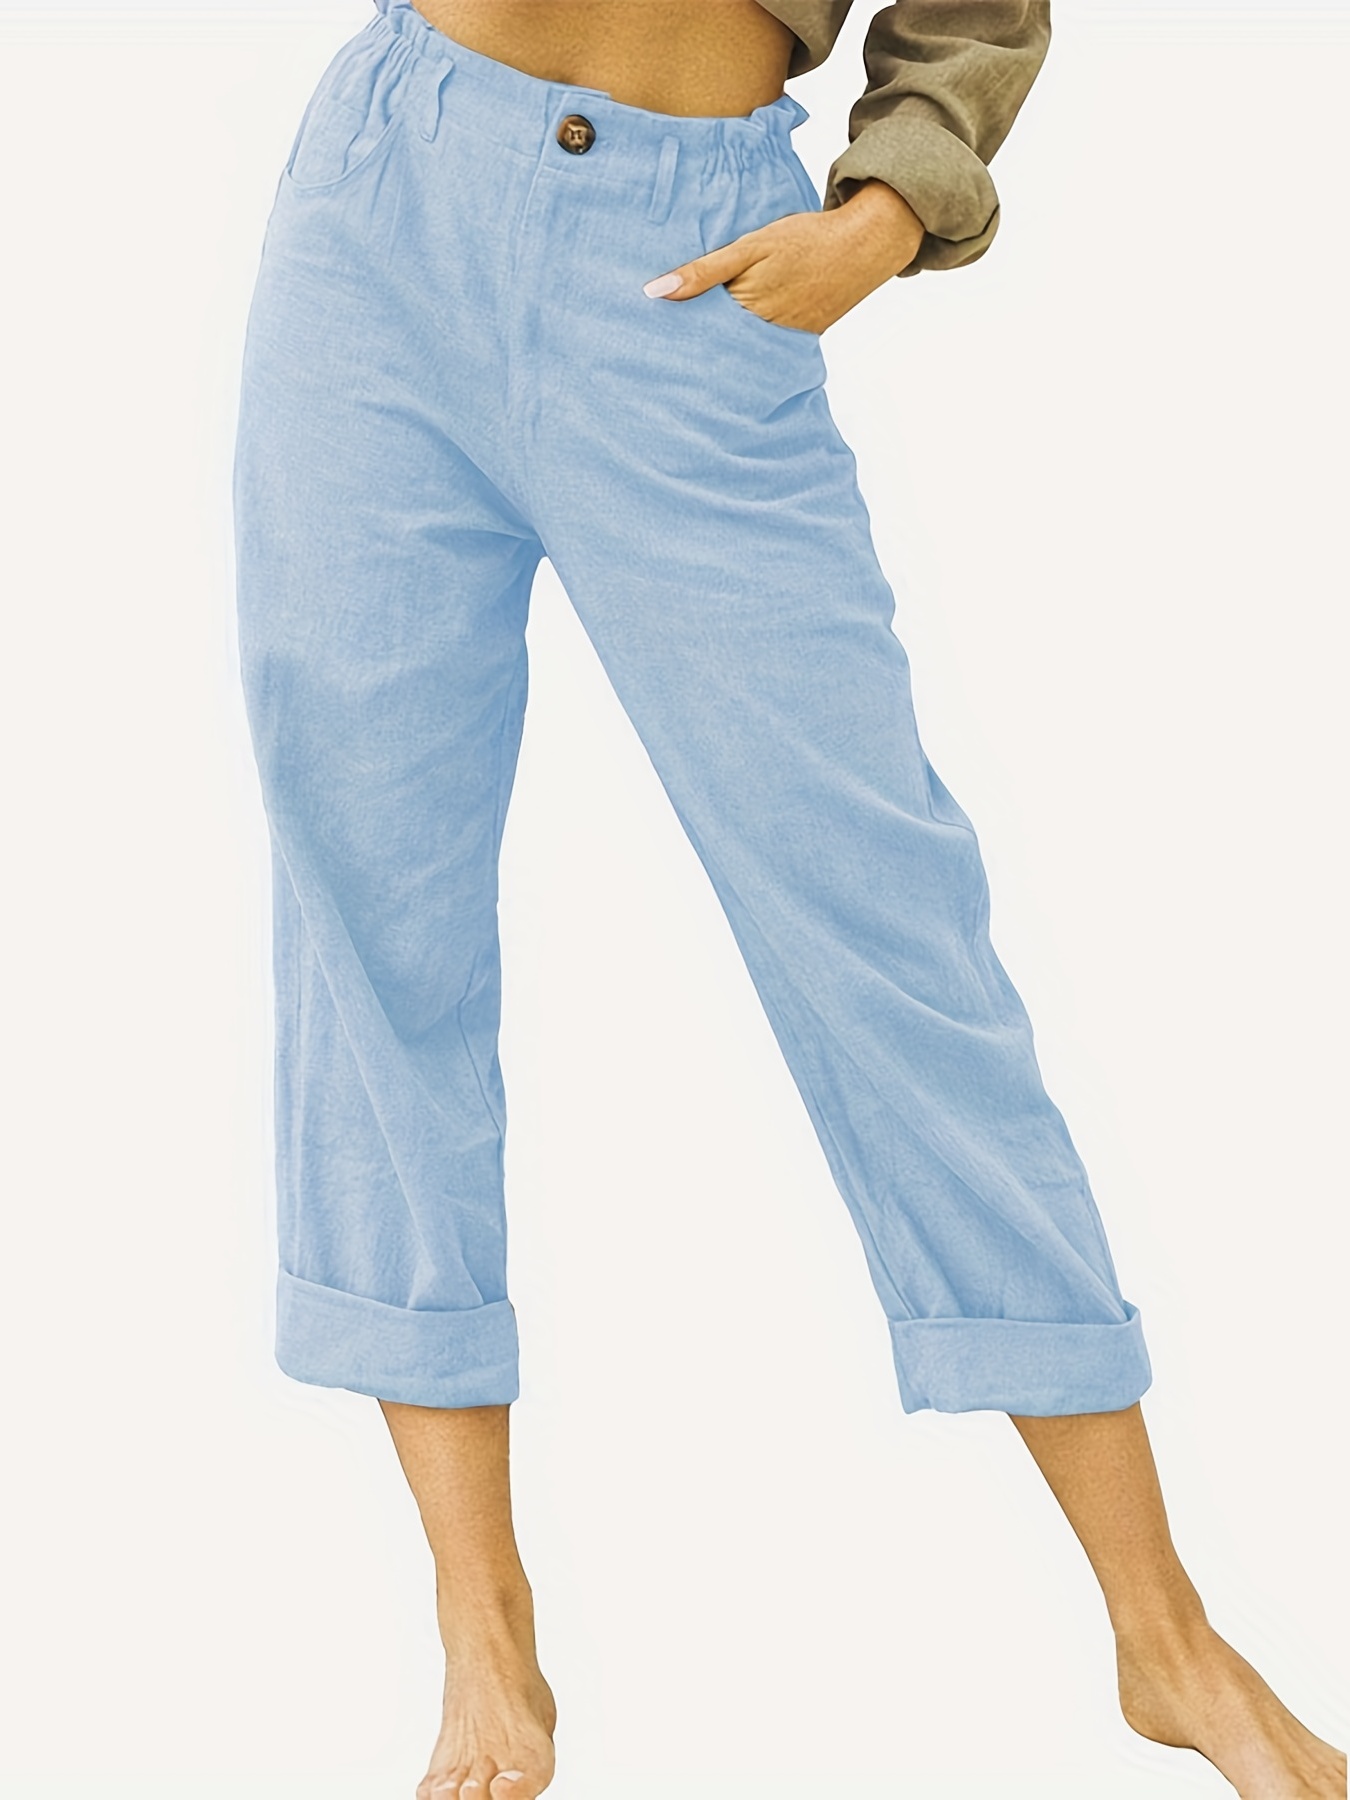 HSMQHJWE Women'S Trouser Pants Womens Cotton Pants Casual Petite